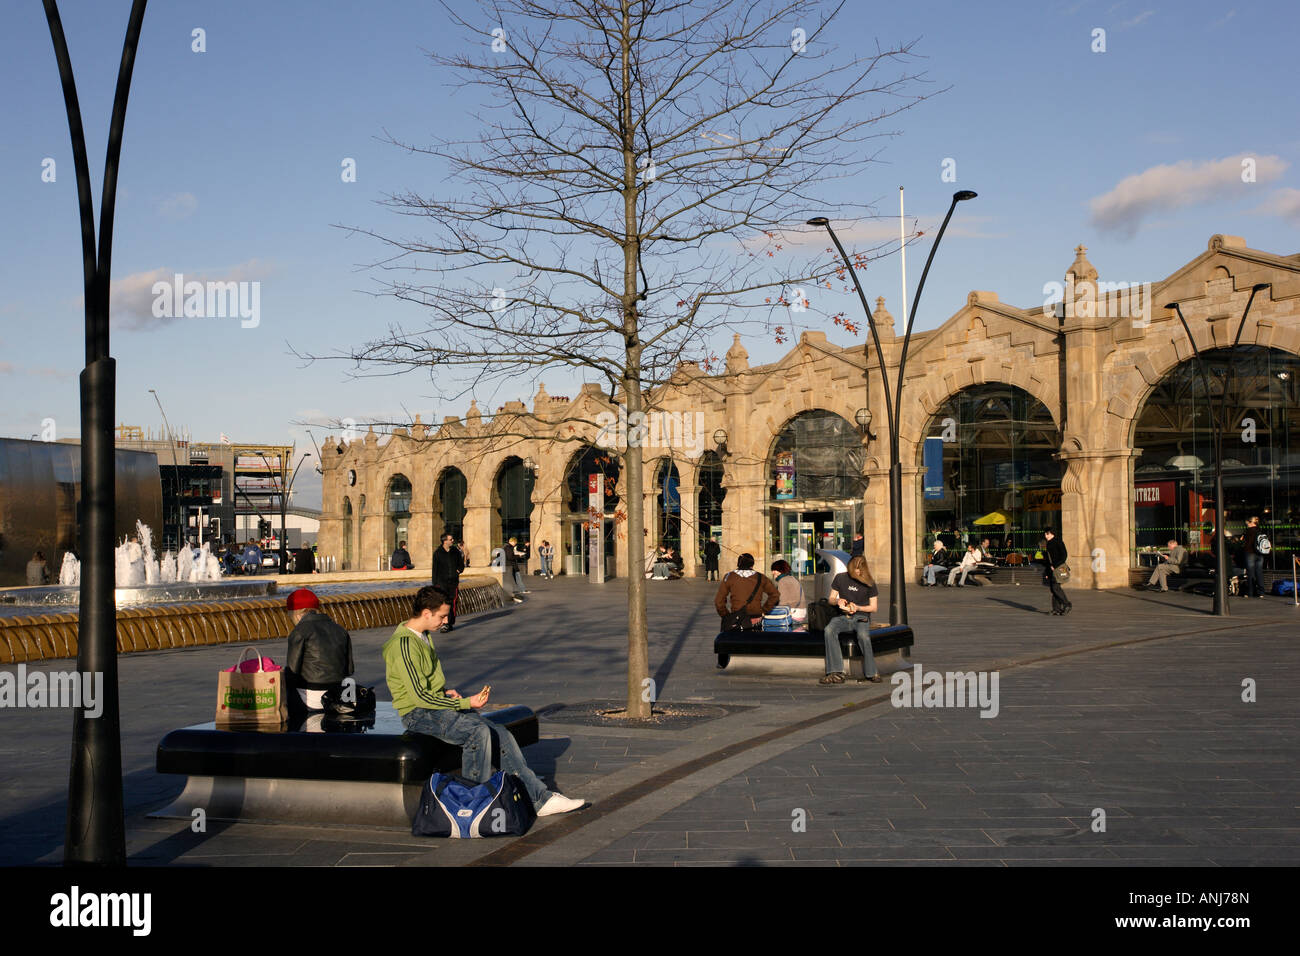 5 Bradford Market Street Railway Station Photo Midland Railway.